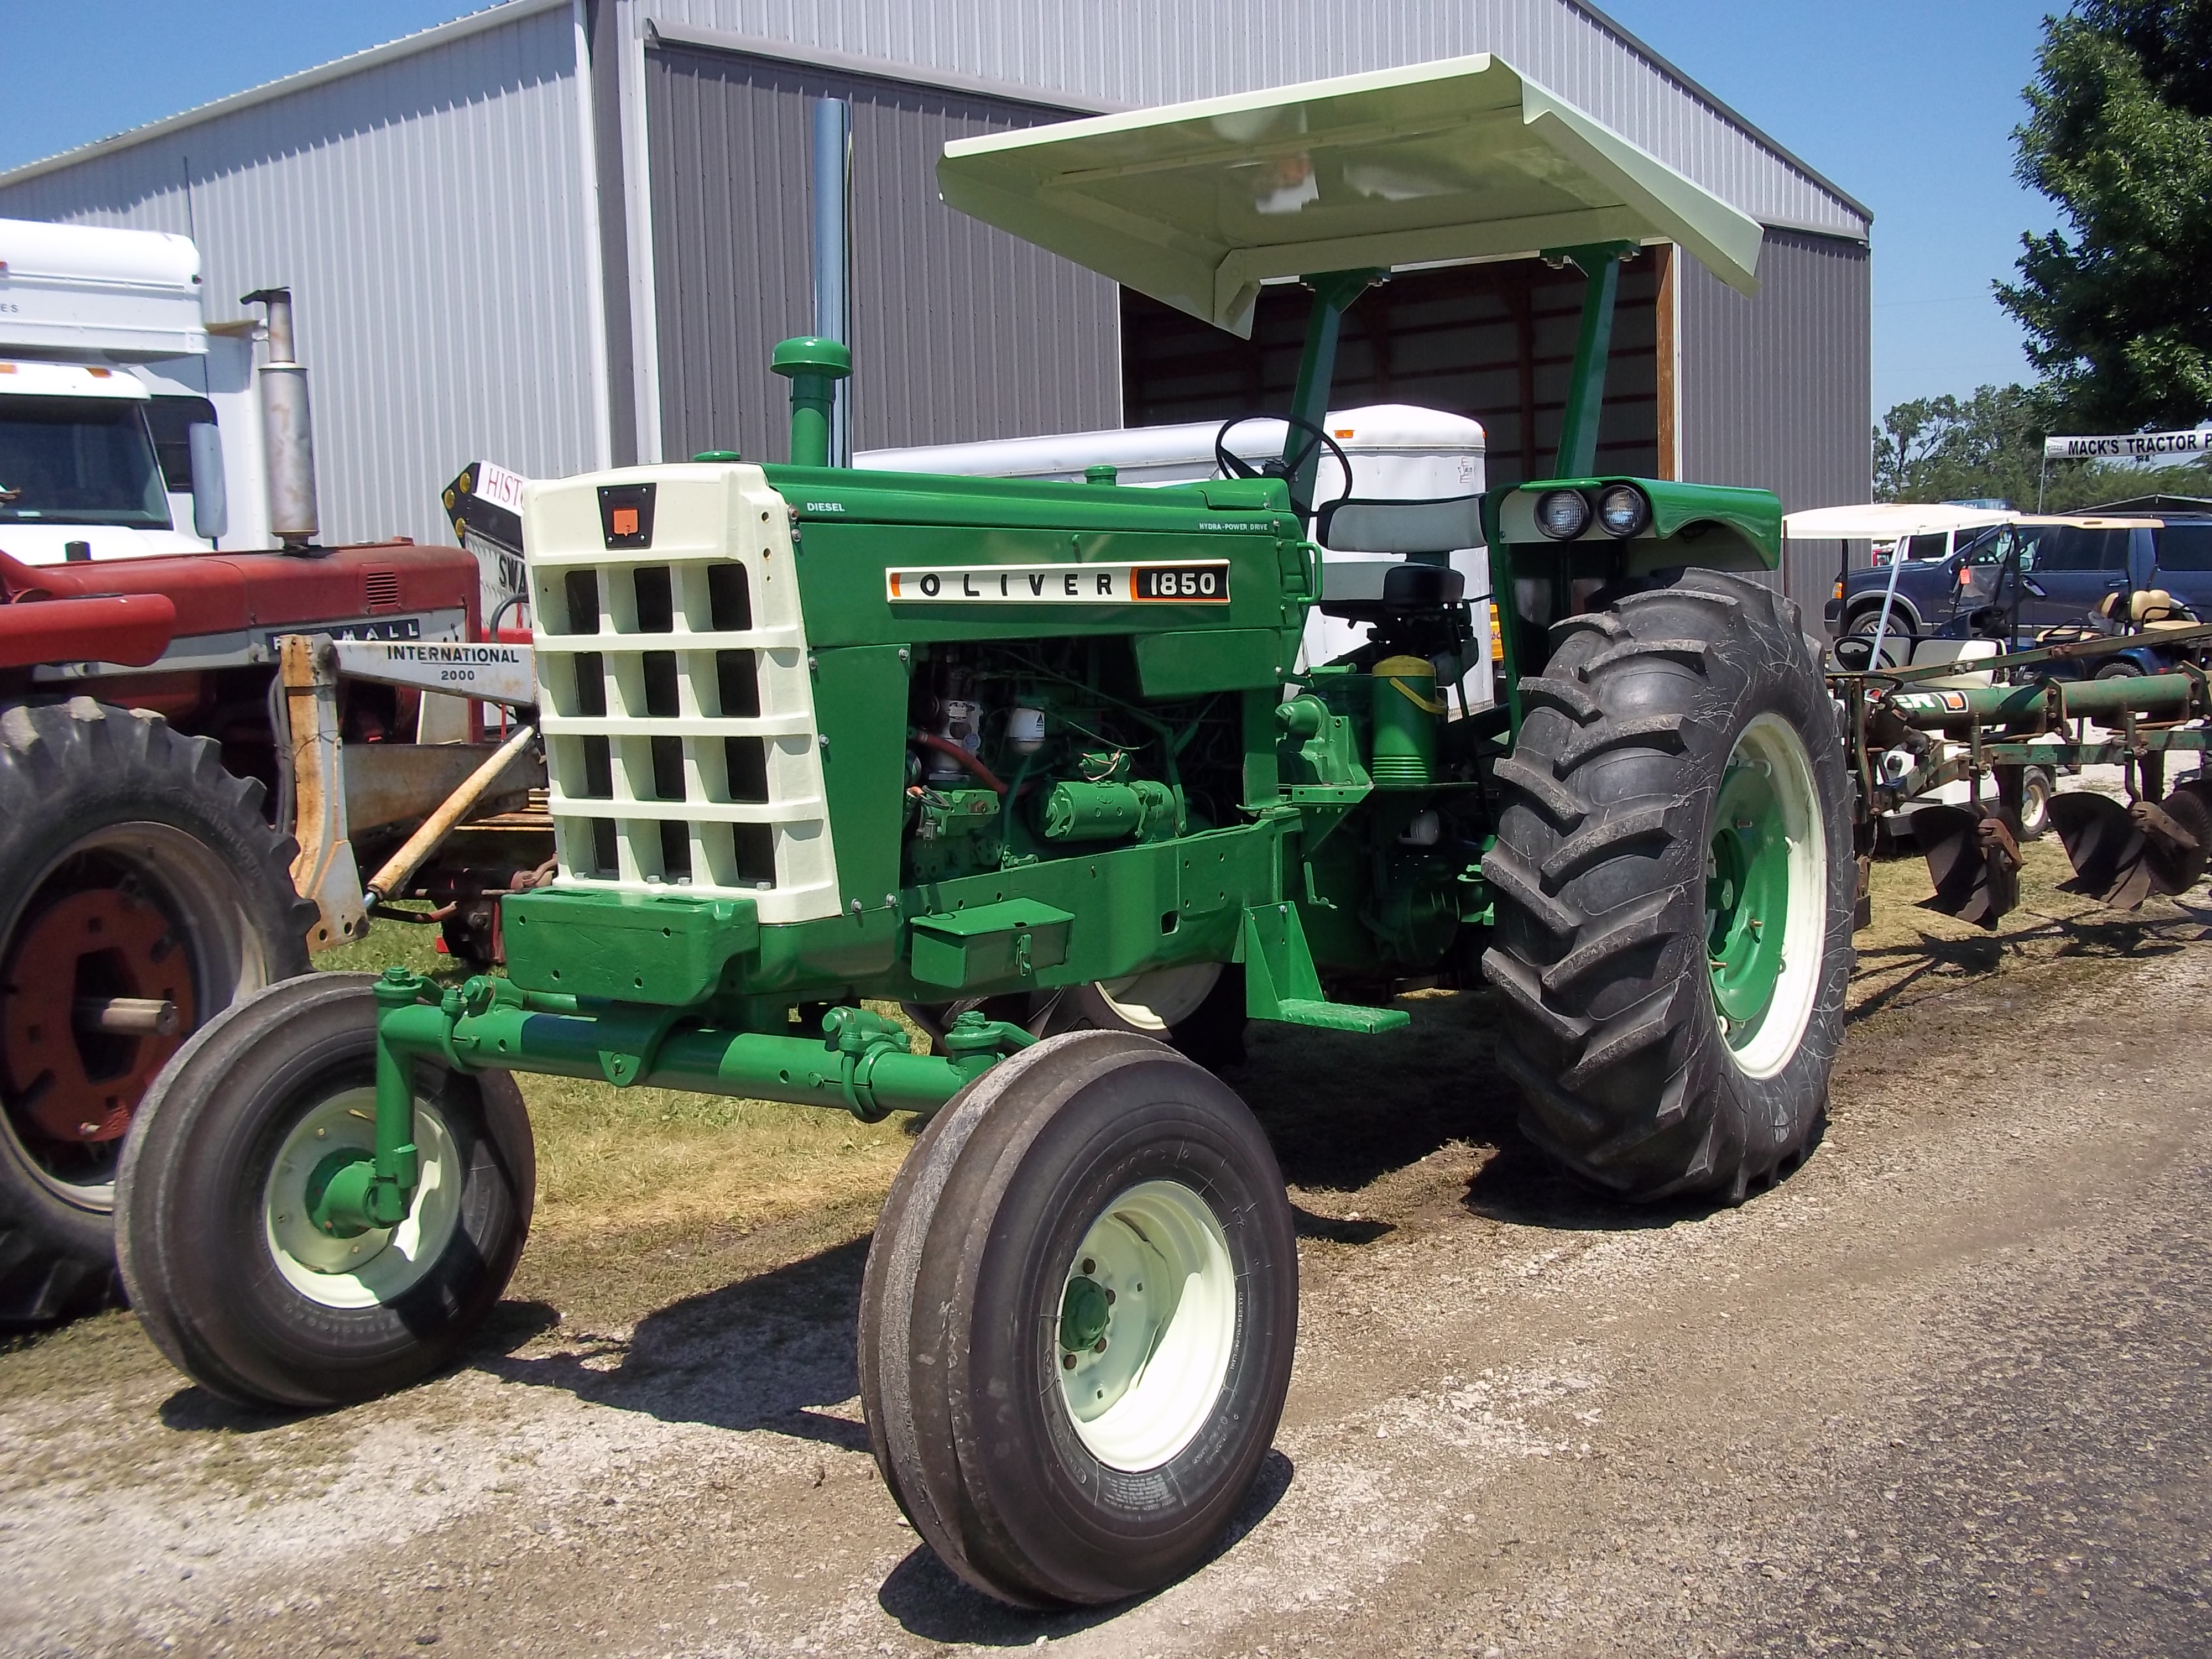 92hp 1850 | Oliver Tractors & Equipment | Pinterest